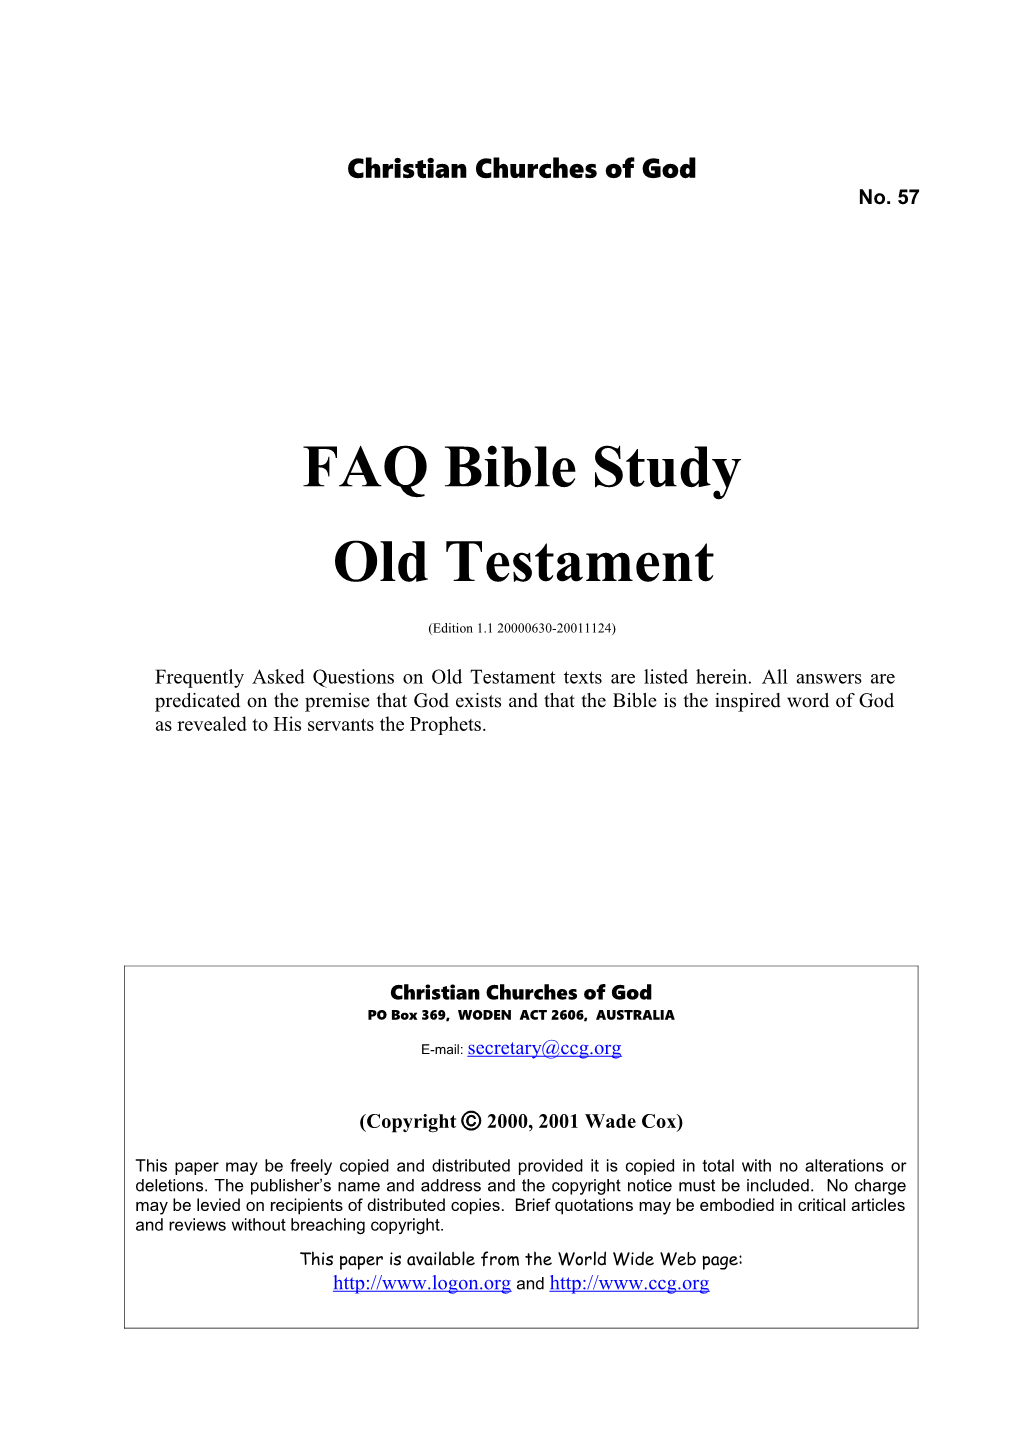 FAQ Bible Study Old Testament (No. 57)